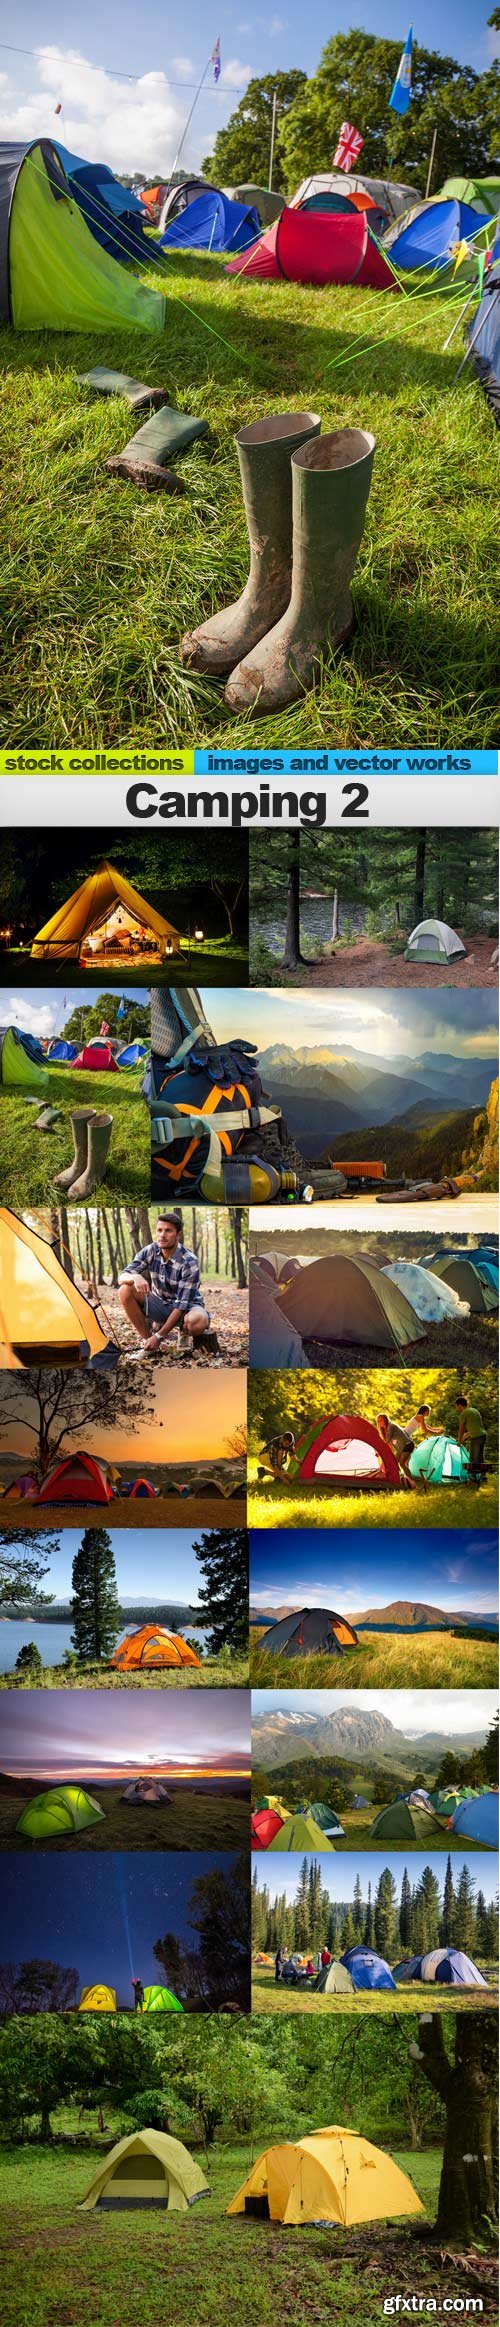 Camping 2, 15 x UHQ JPEG